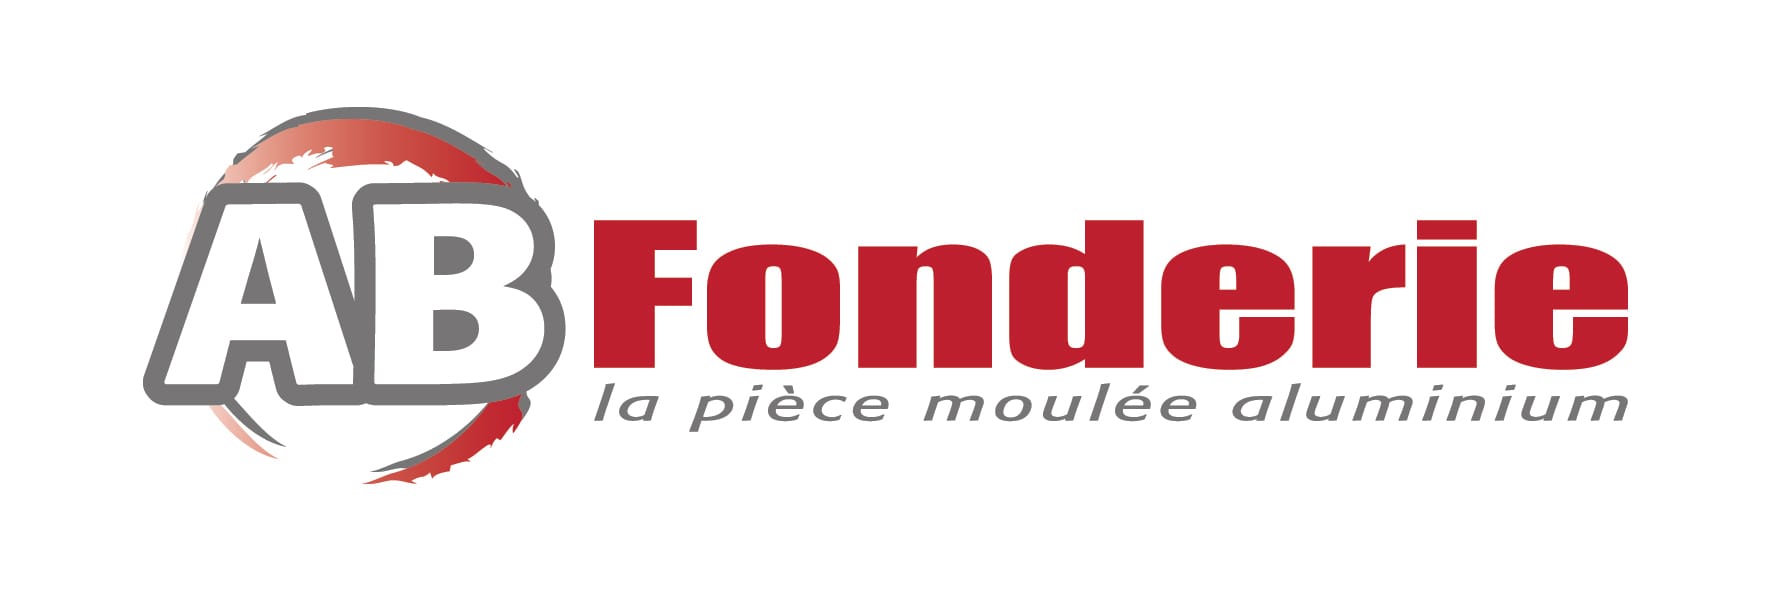 AB FONDERIE's logo